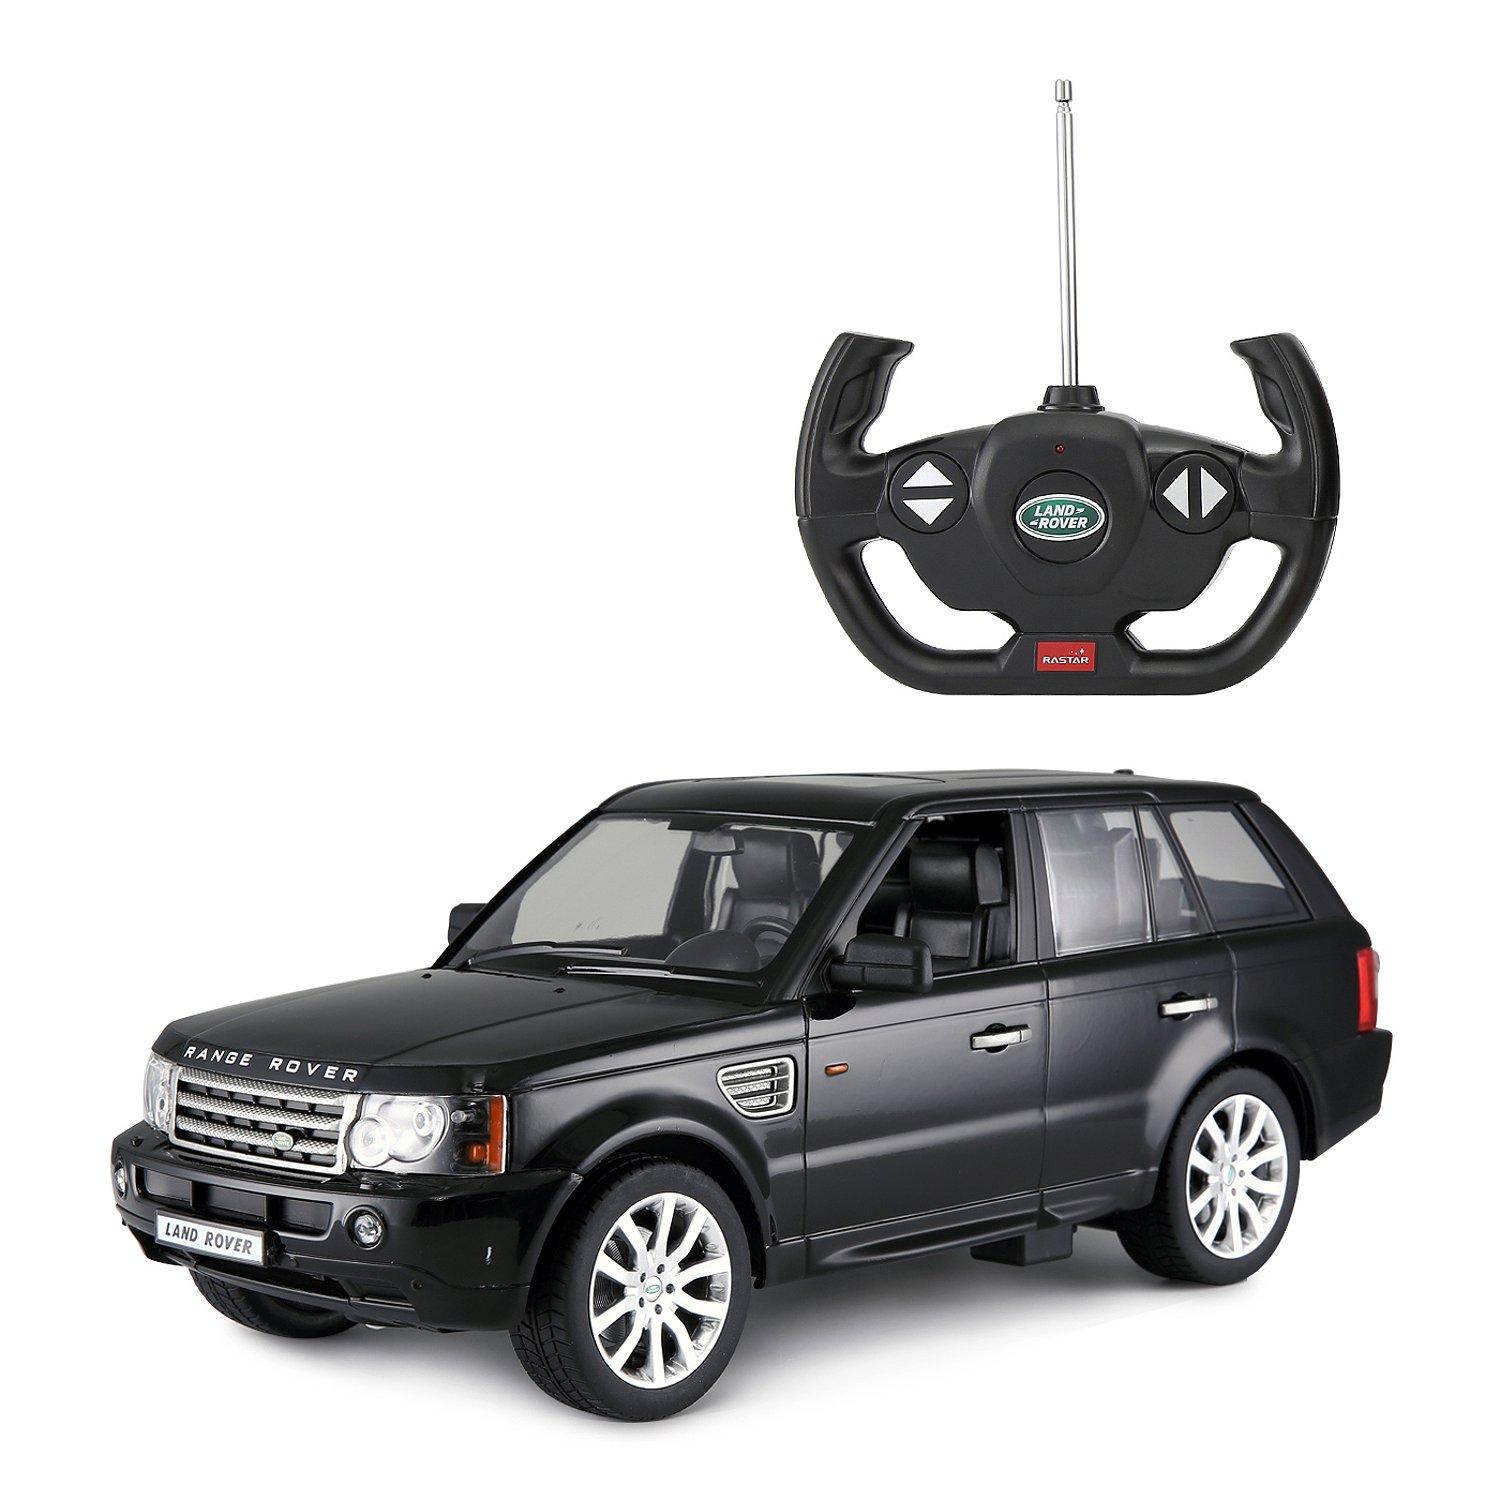 Rastar Машина на радиоуправлении 1:14 Range Rover Sport, цвет – черный rastar машина на радиоуправлении bugatti chiron 1 24